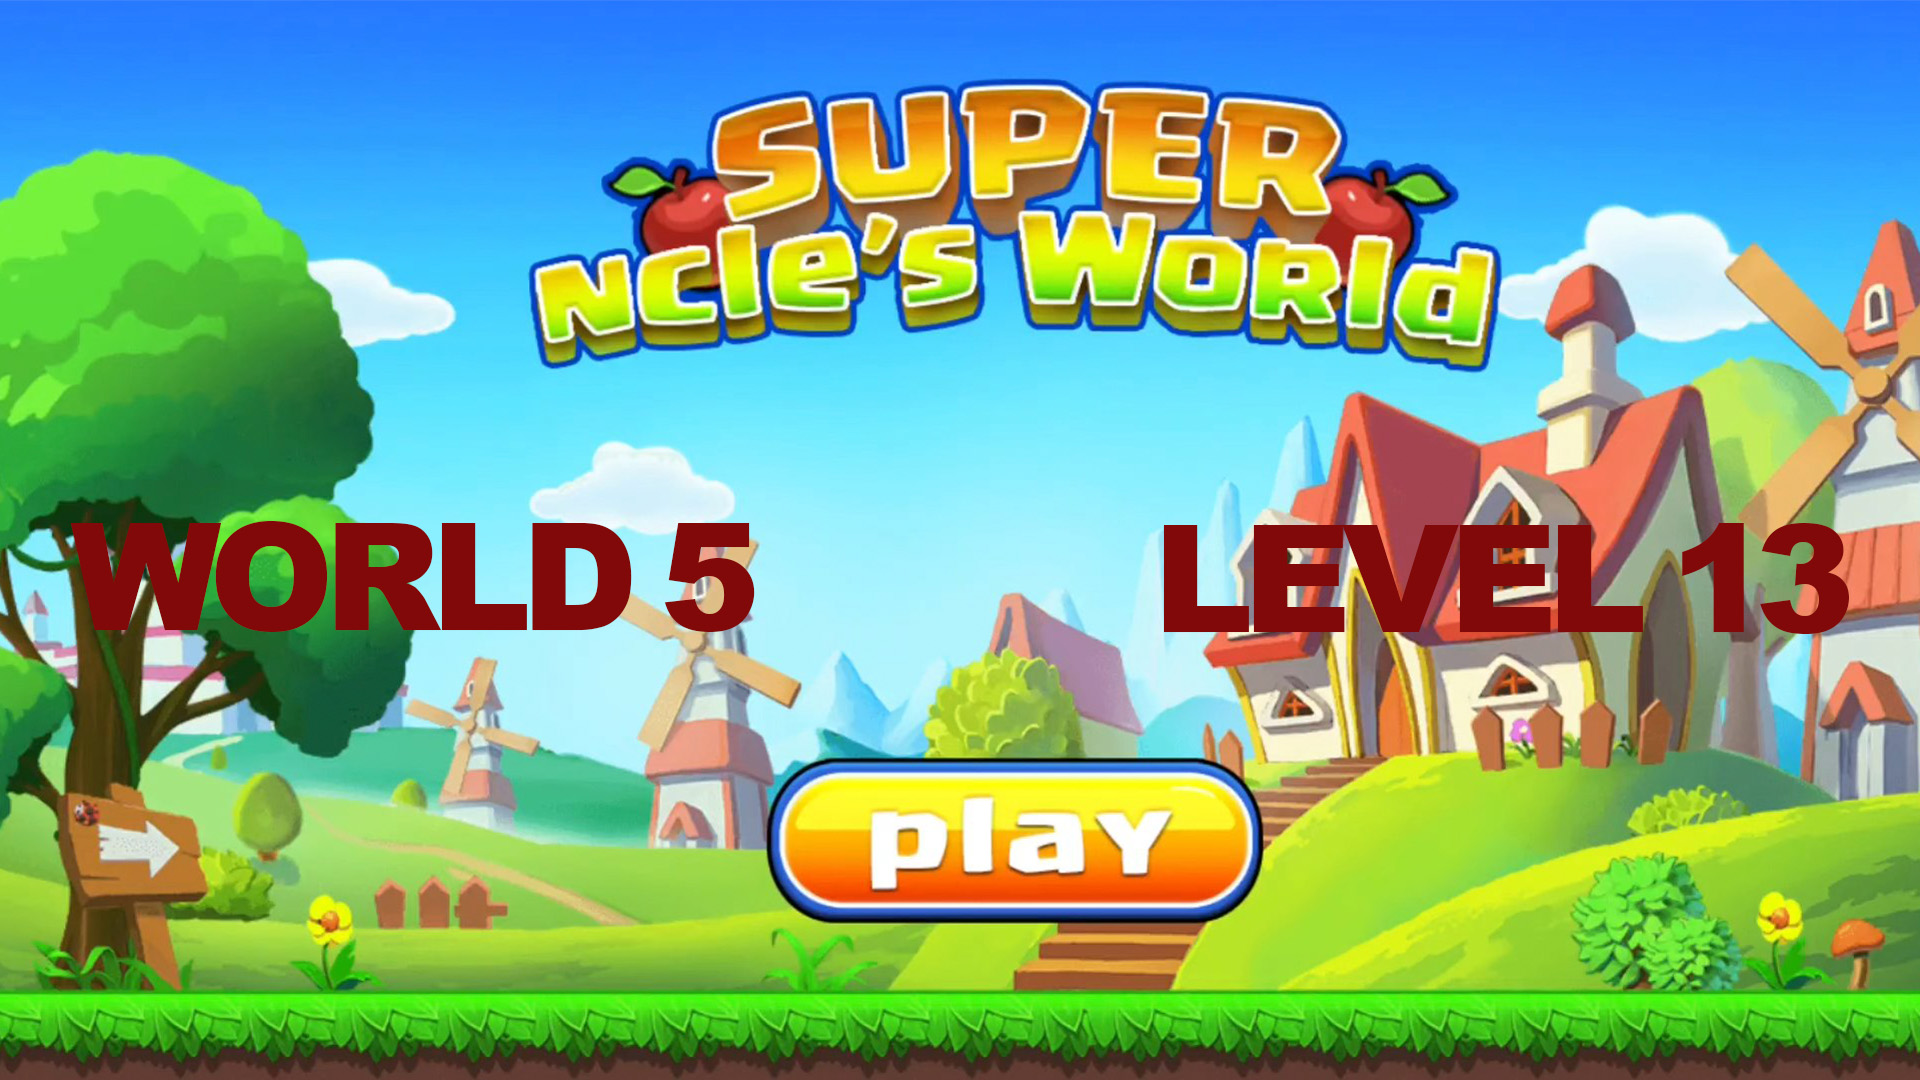 Super ncle's  World 5. Level 13.